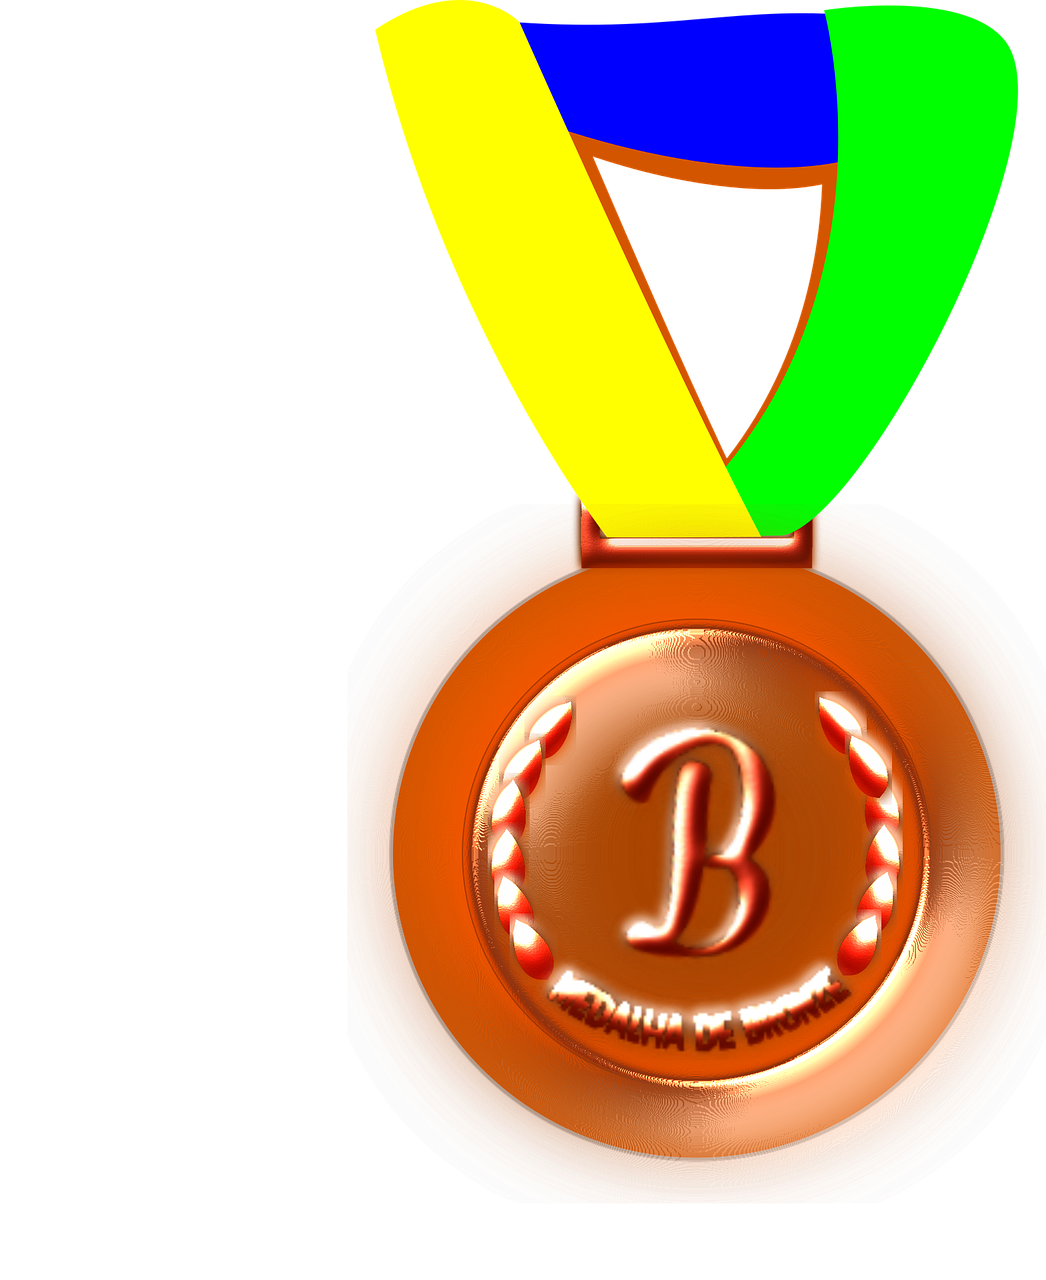 bronze bronze medal medal free photo